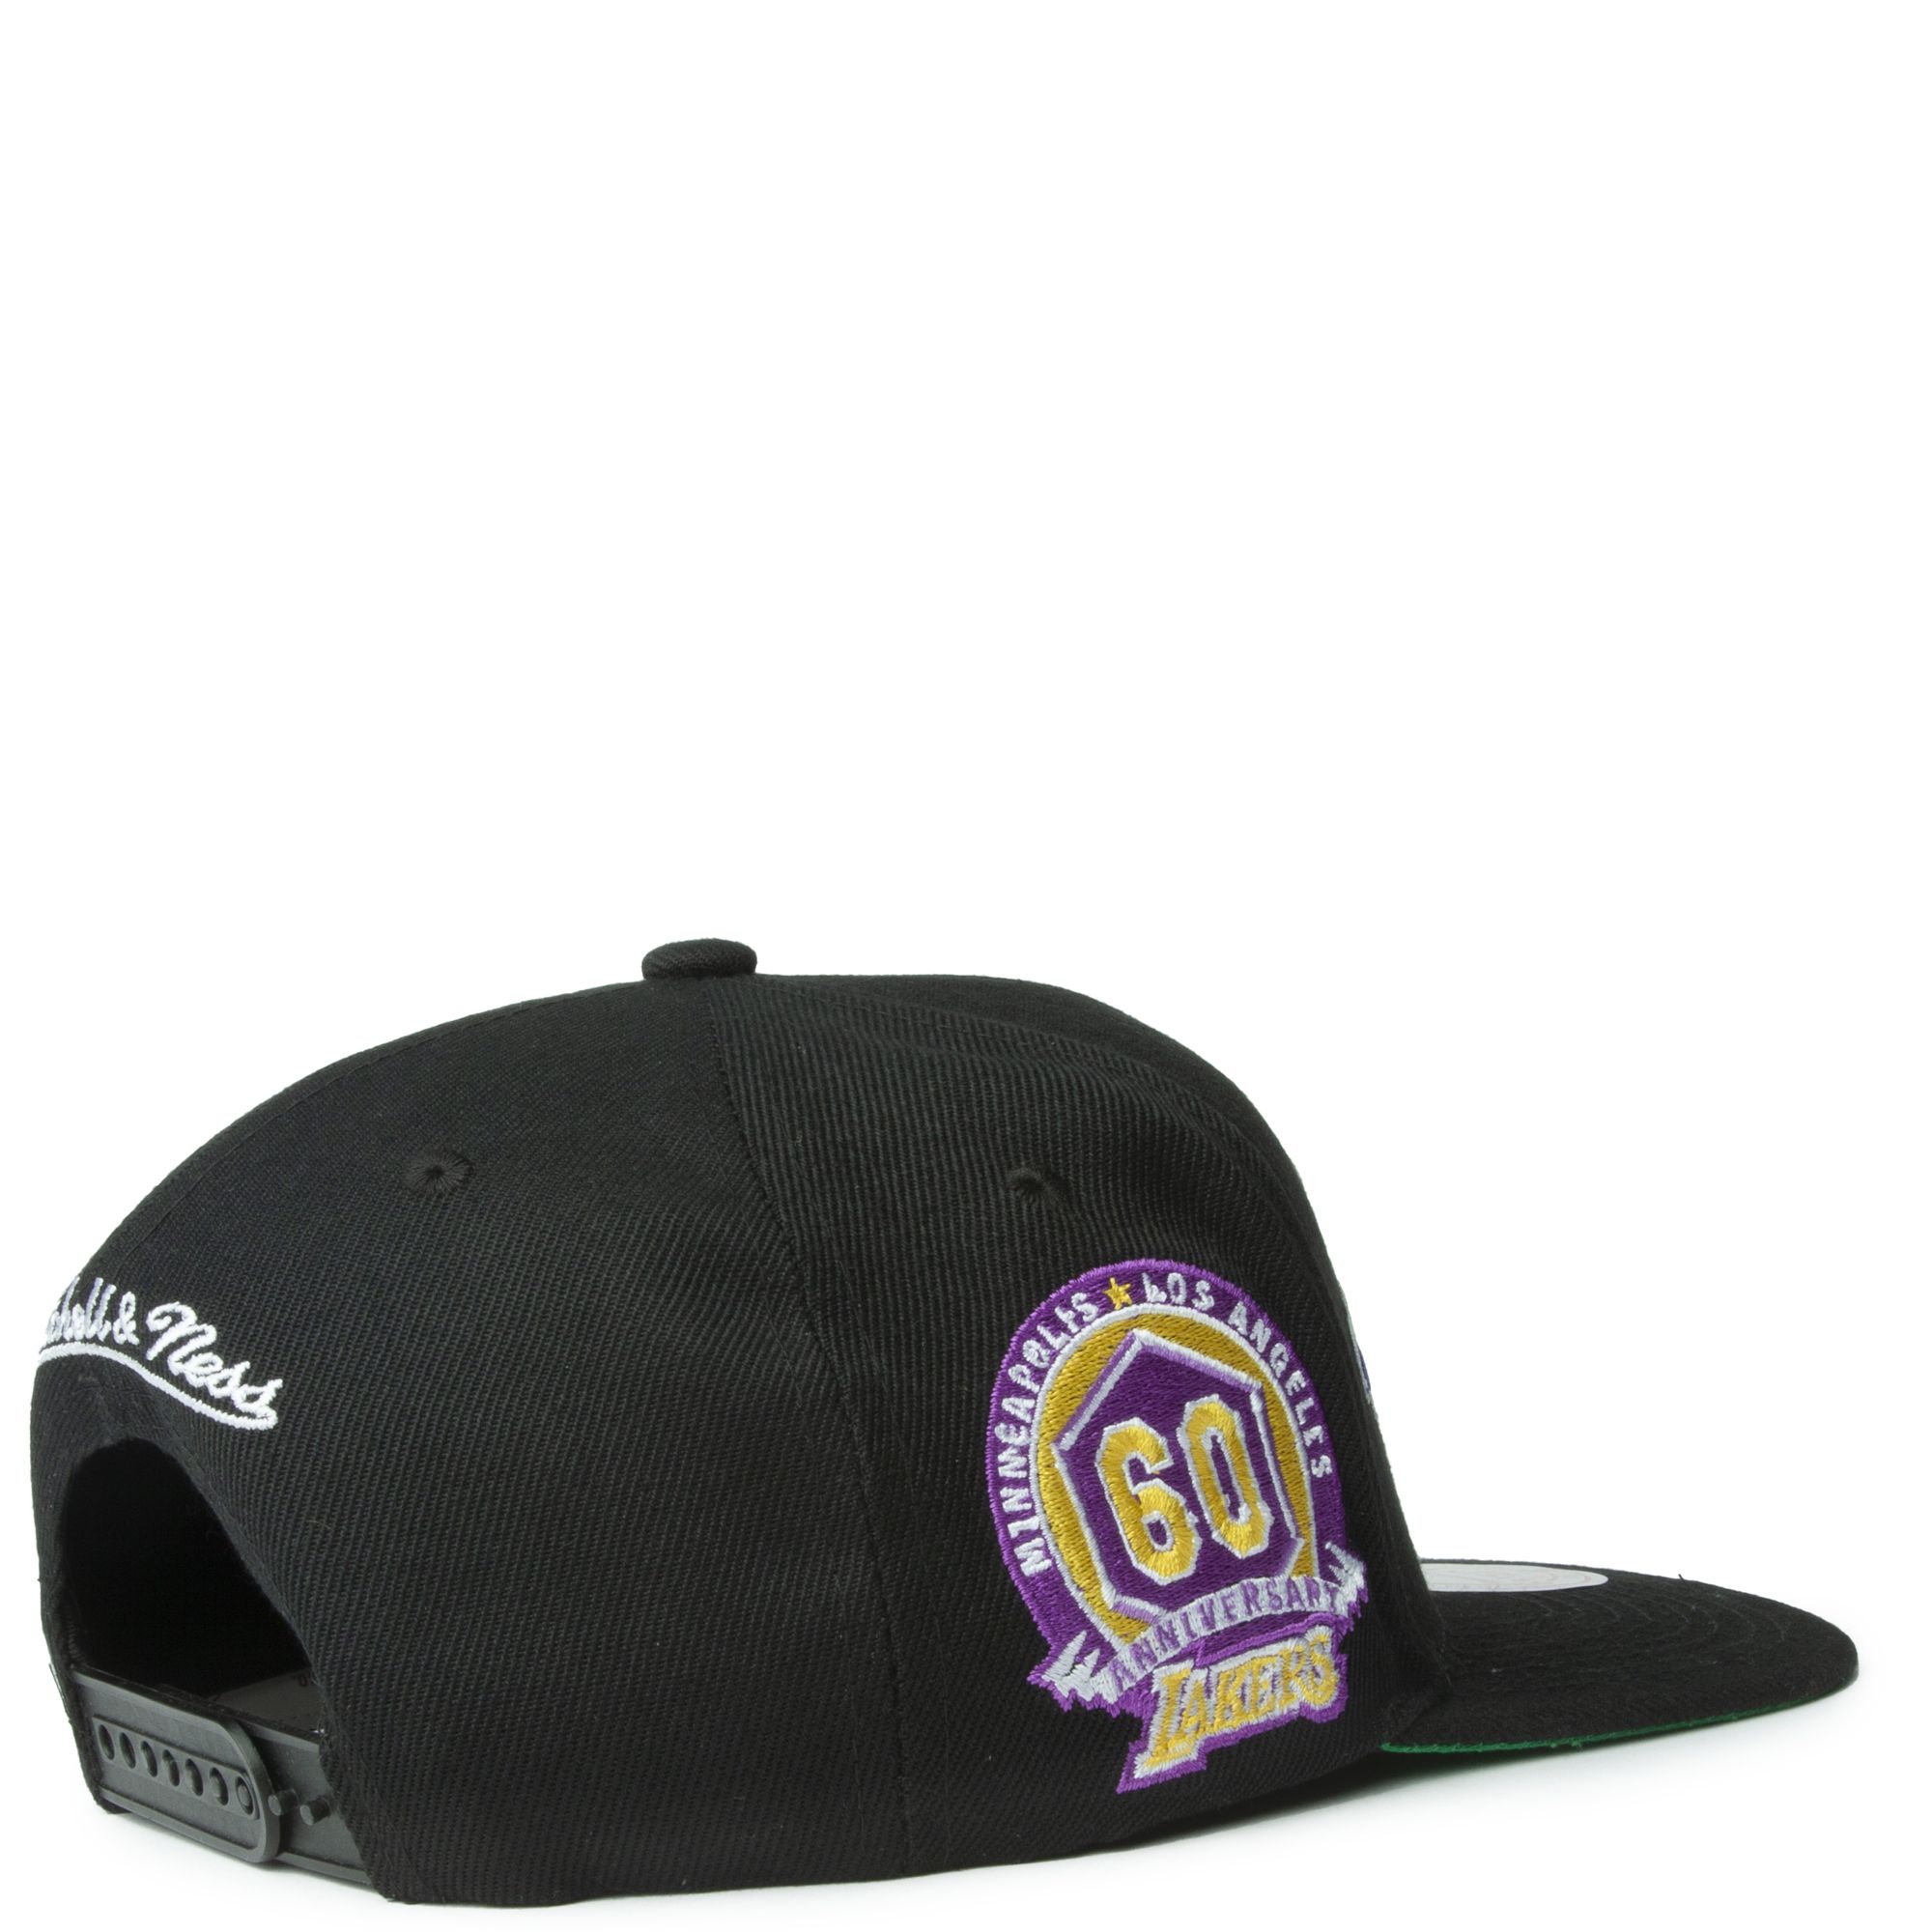 Los Angeles Lakers Wheat Tc Tan Snapback - Mitchell & Ness cap